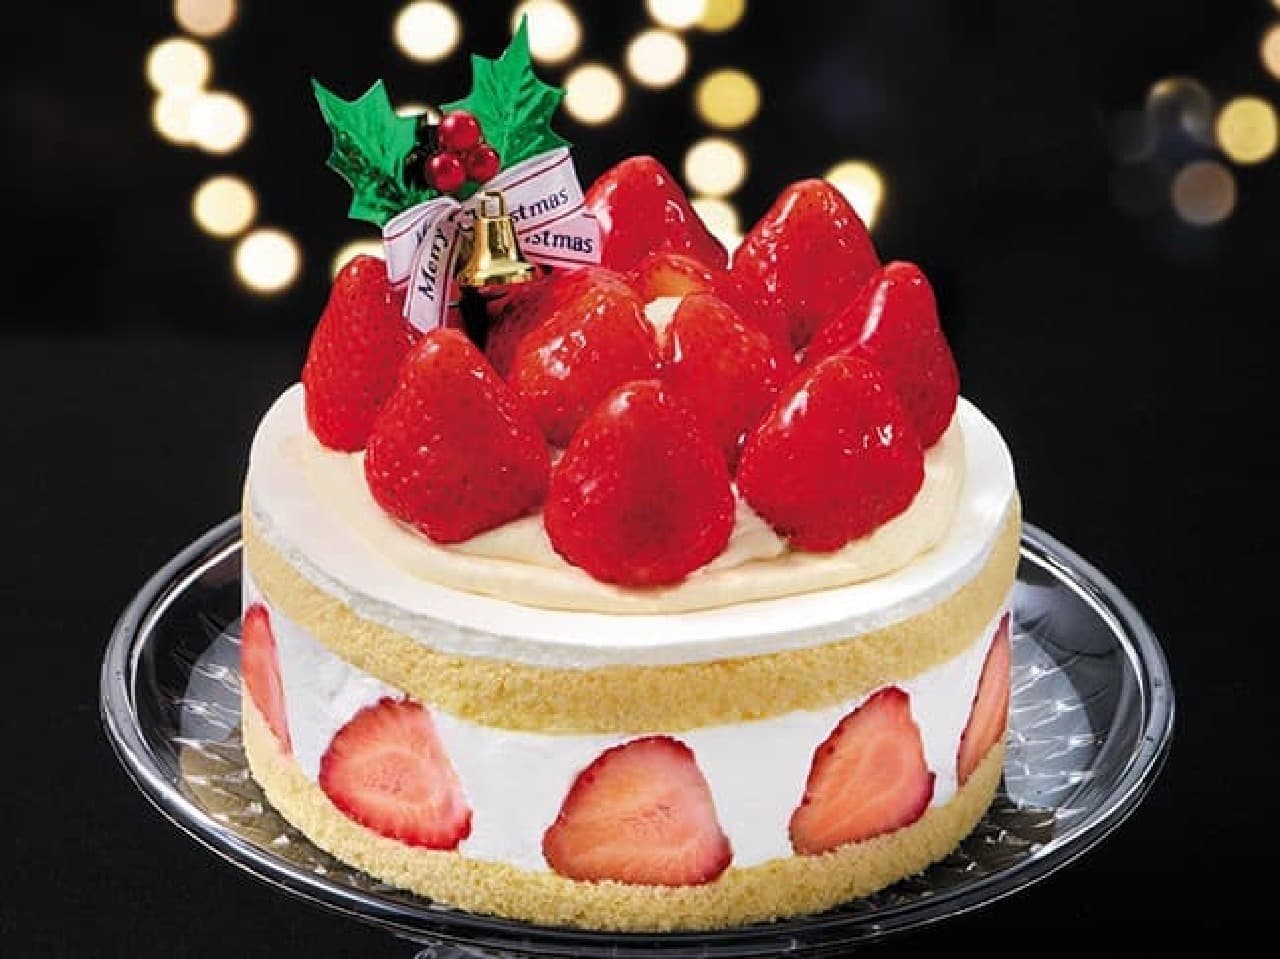 Fujiya "Luxurious Christmas Shortcake filled with Amaou Strawberries".